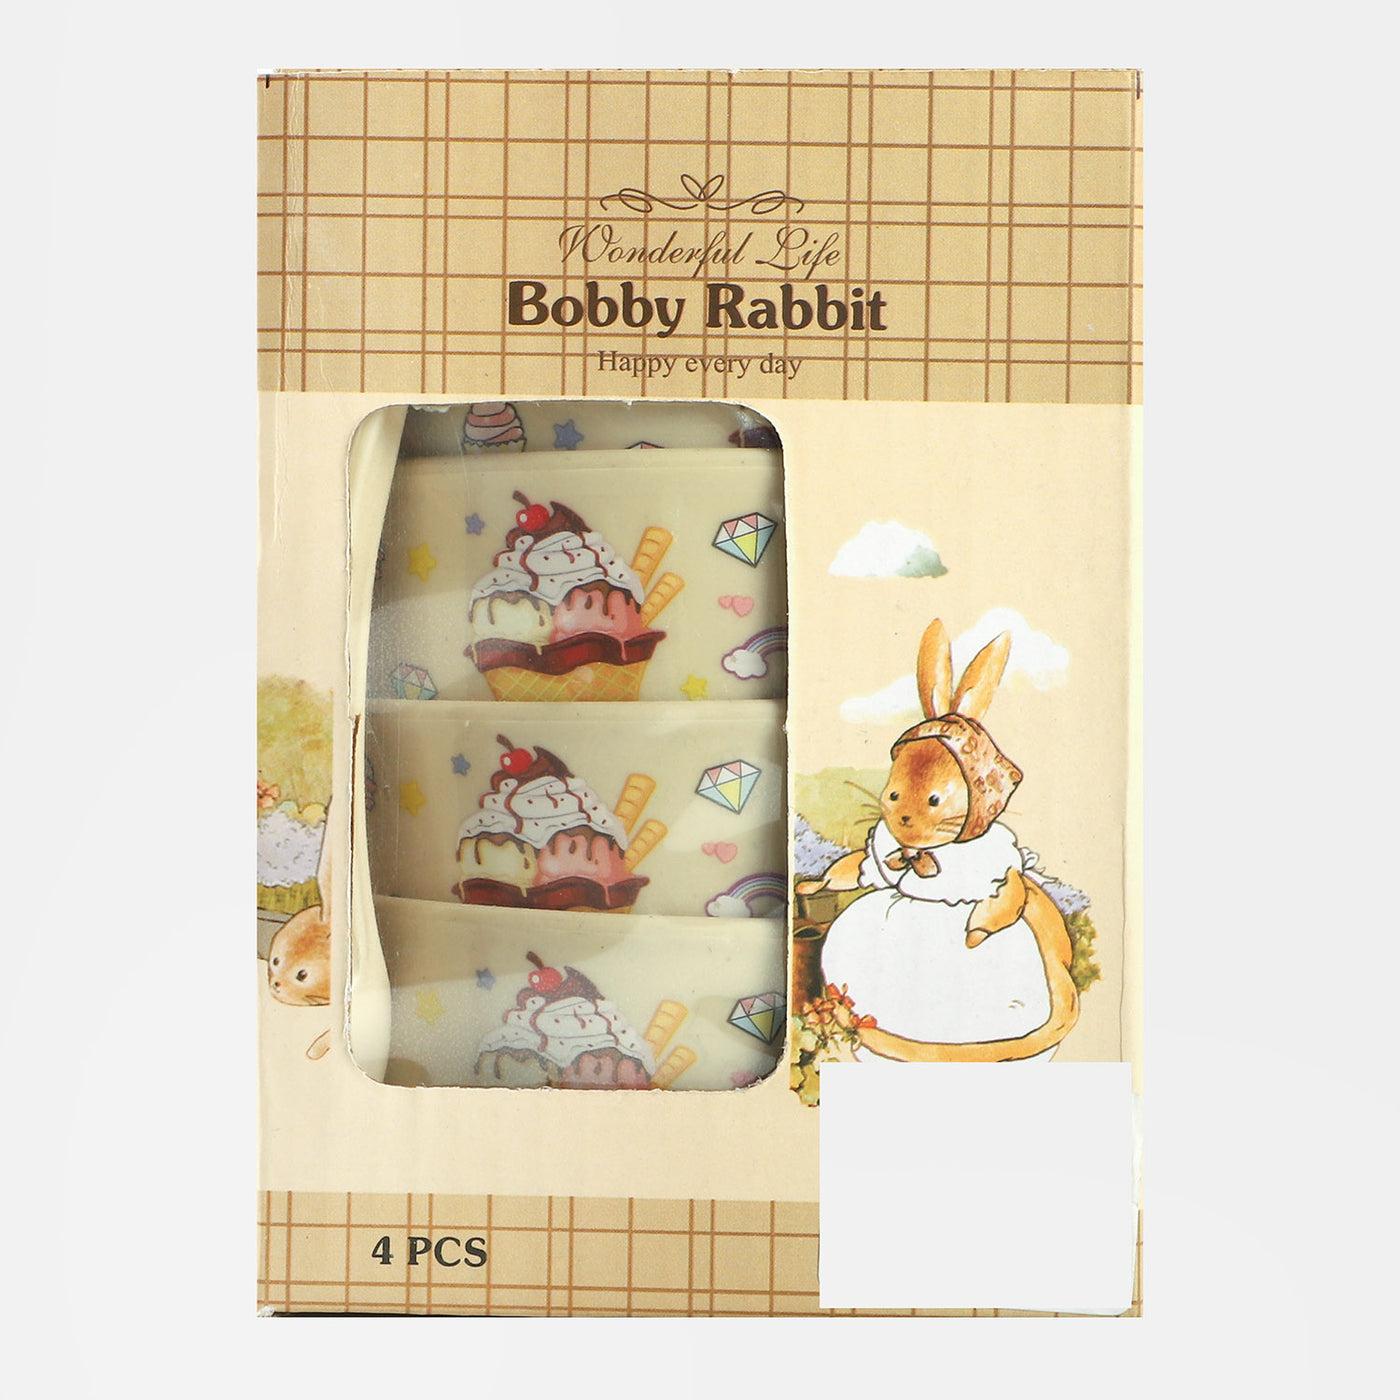 Bobby Rabbit Jelly Bowl W.Spoon 4 Pcs 3034